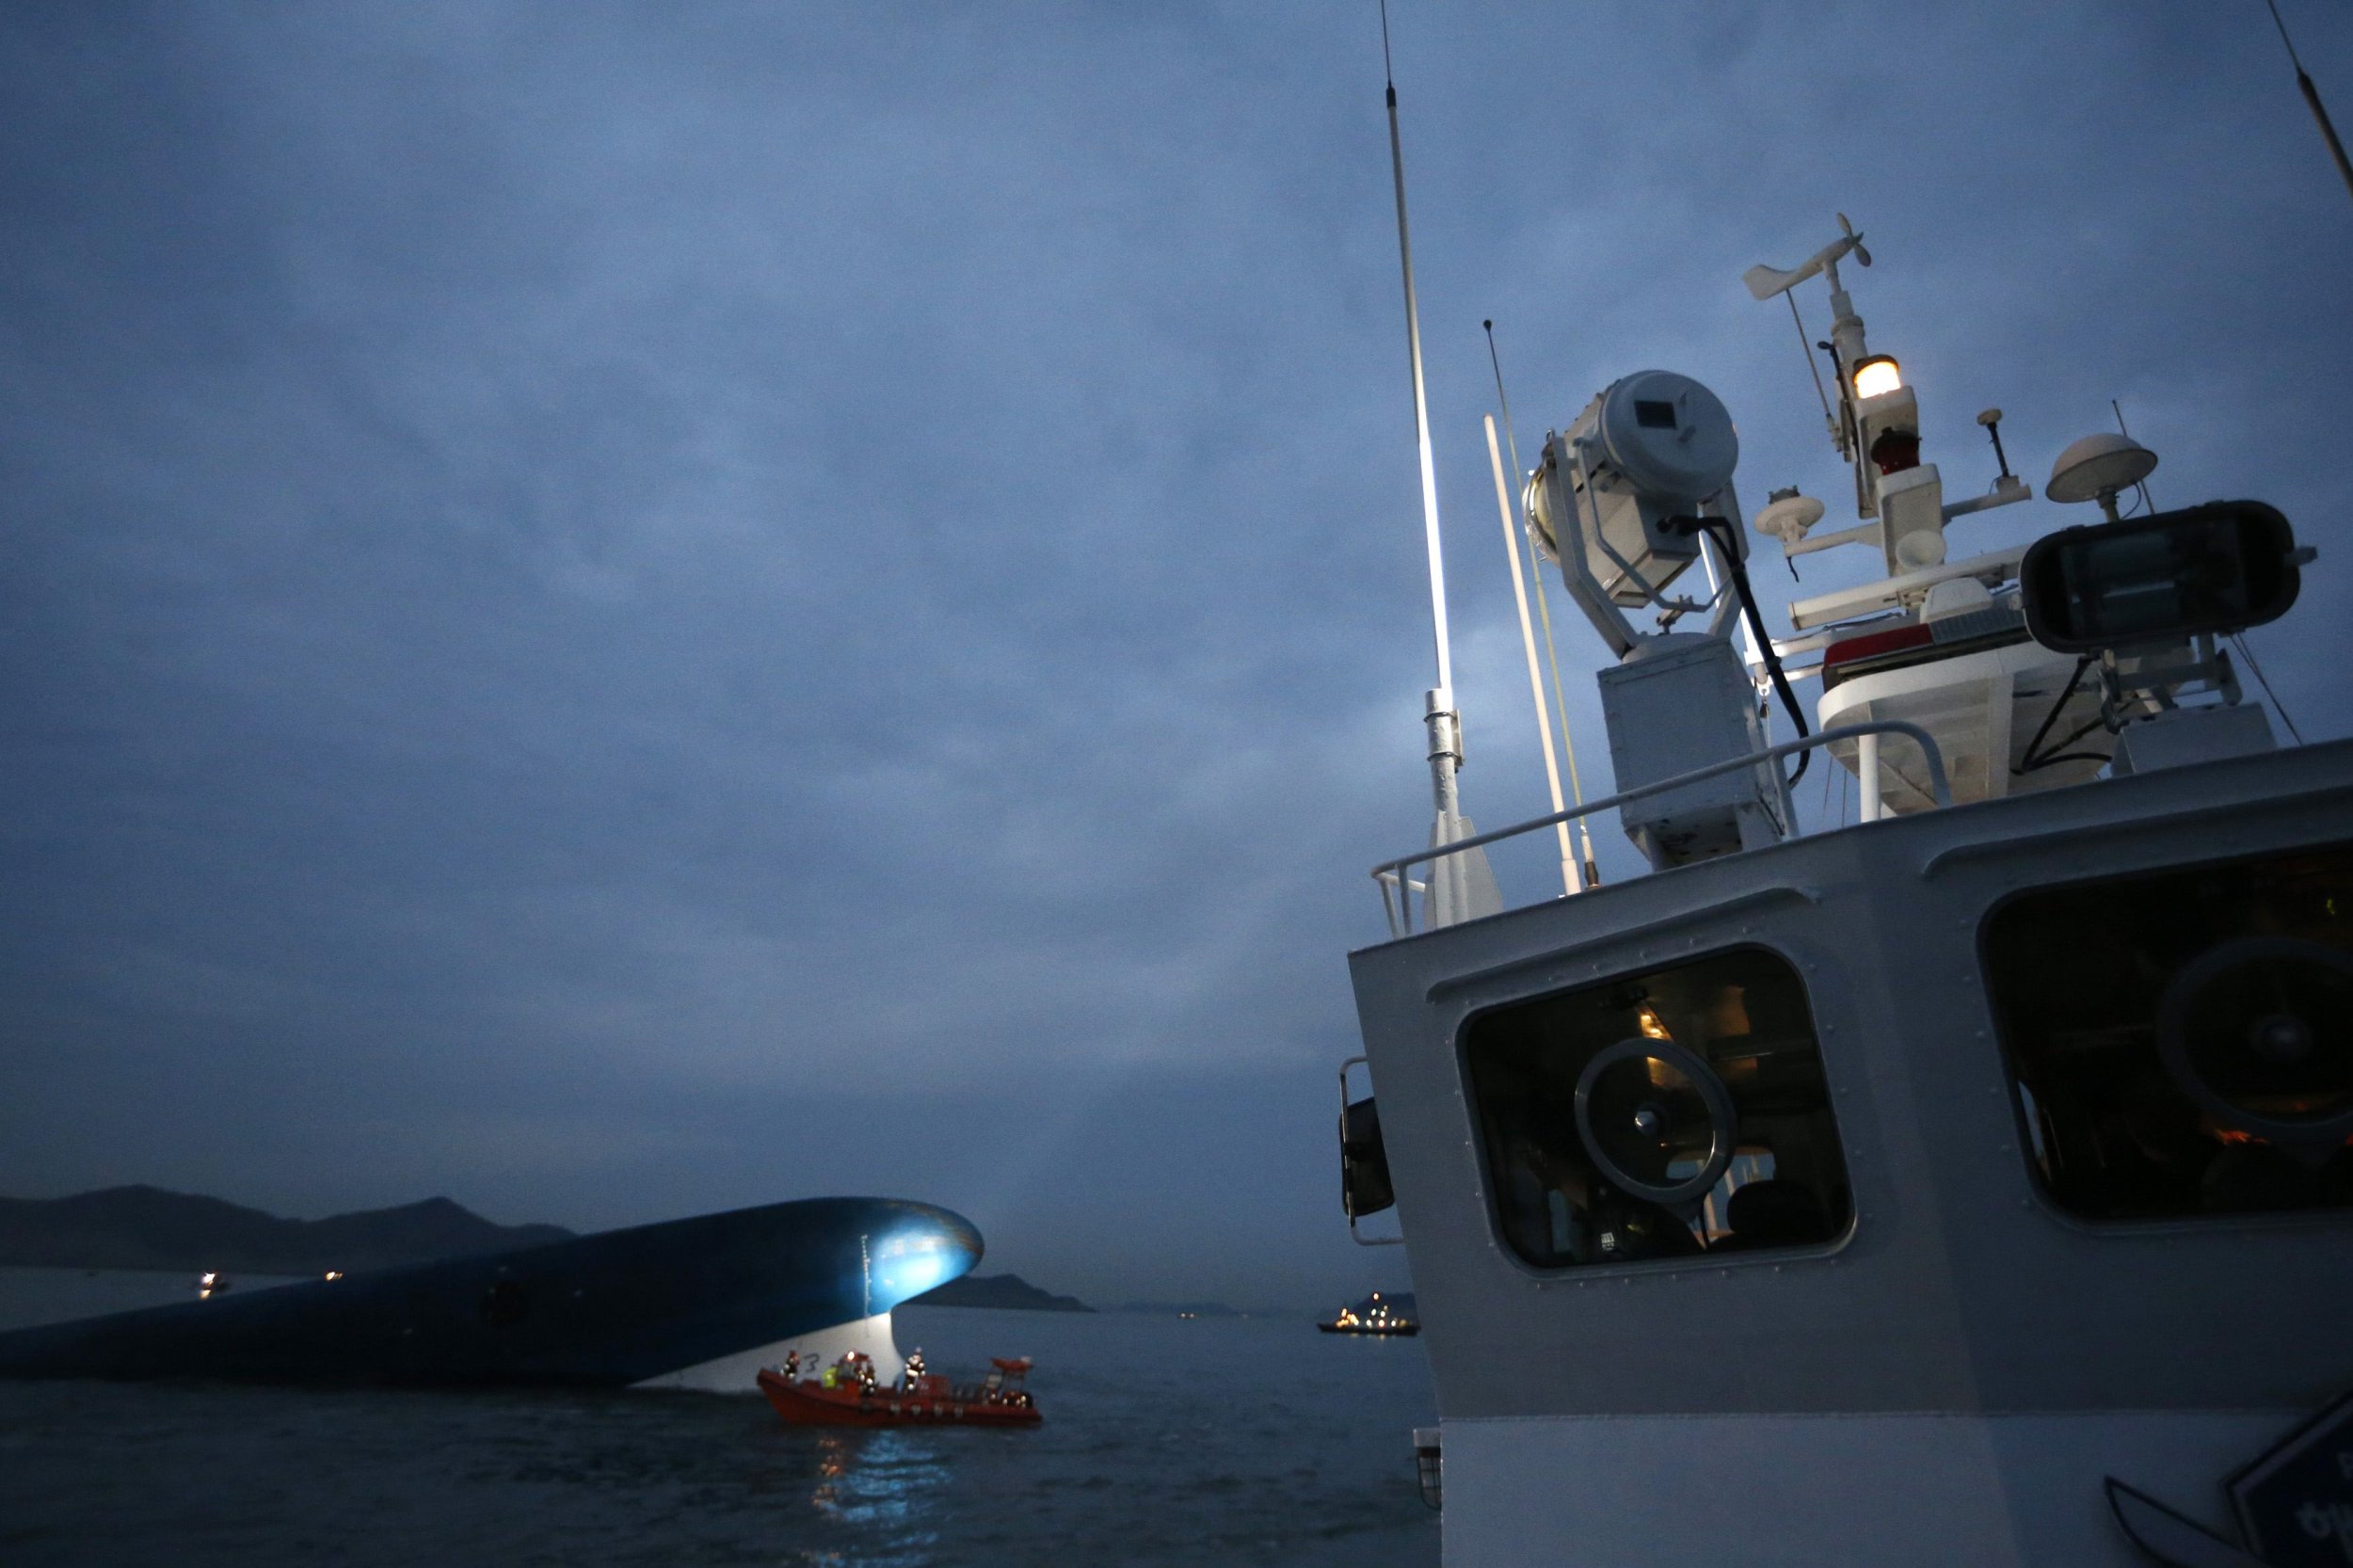 South Korea Ferry - Sewol Sinking Night